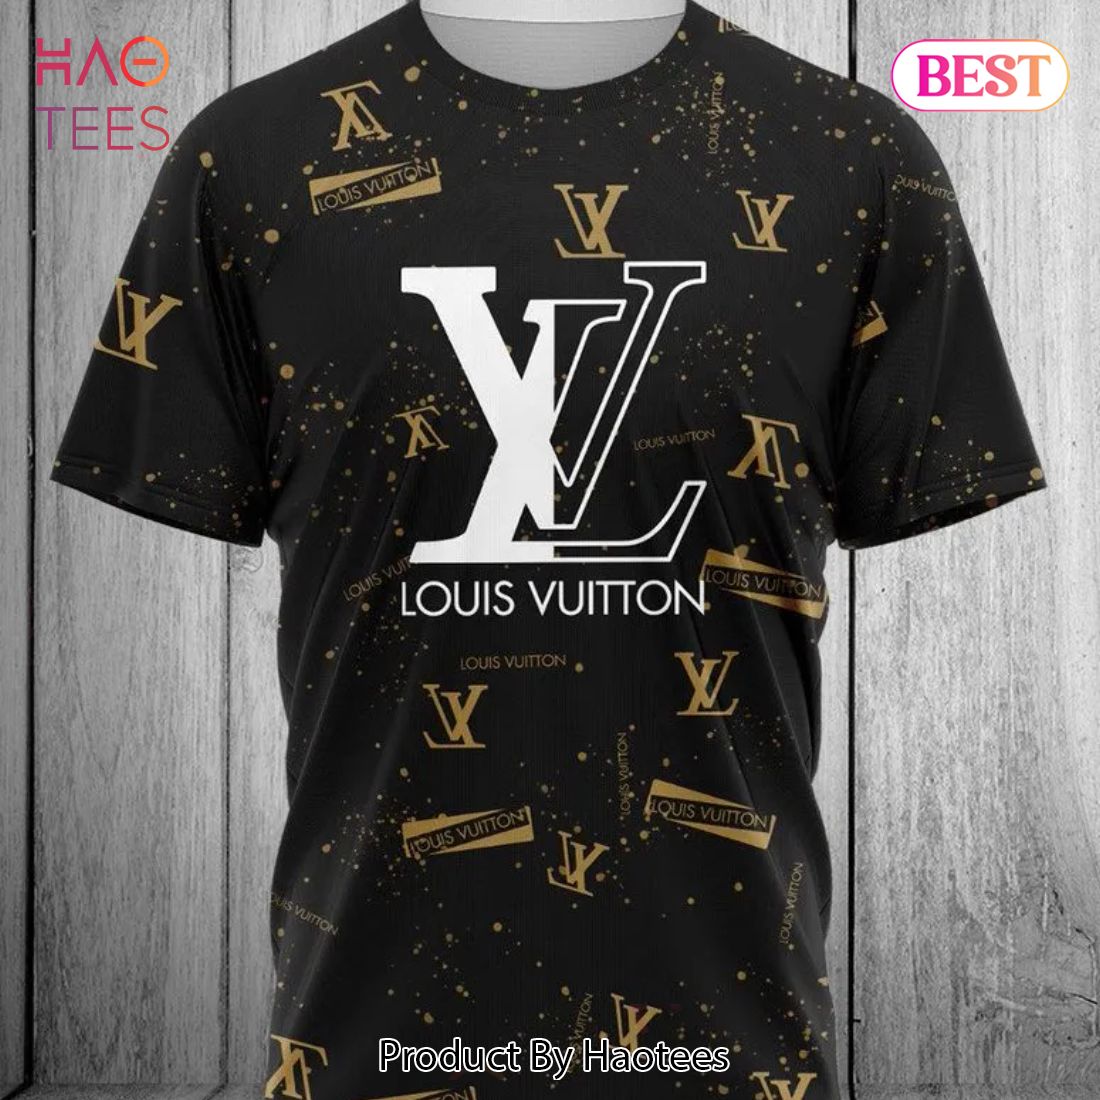 NEW FASHION] Louis Vuitton New Black Luxury Brand T-Shirt Outfit For Men  Women